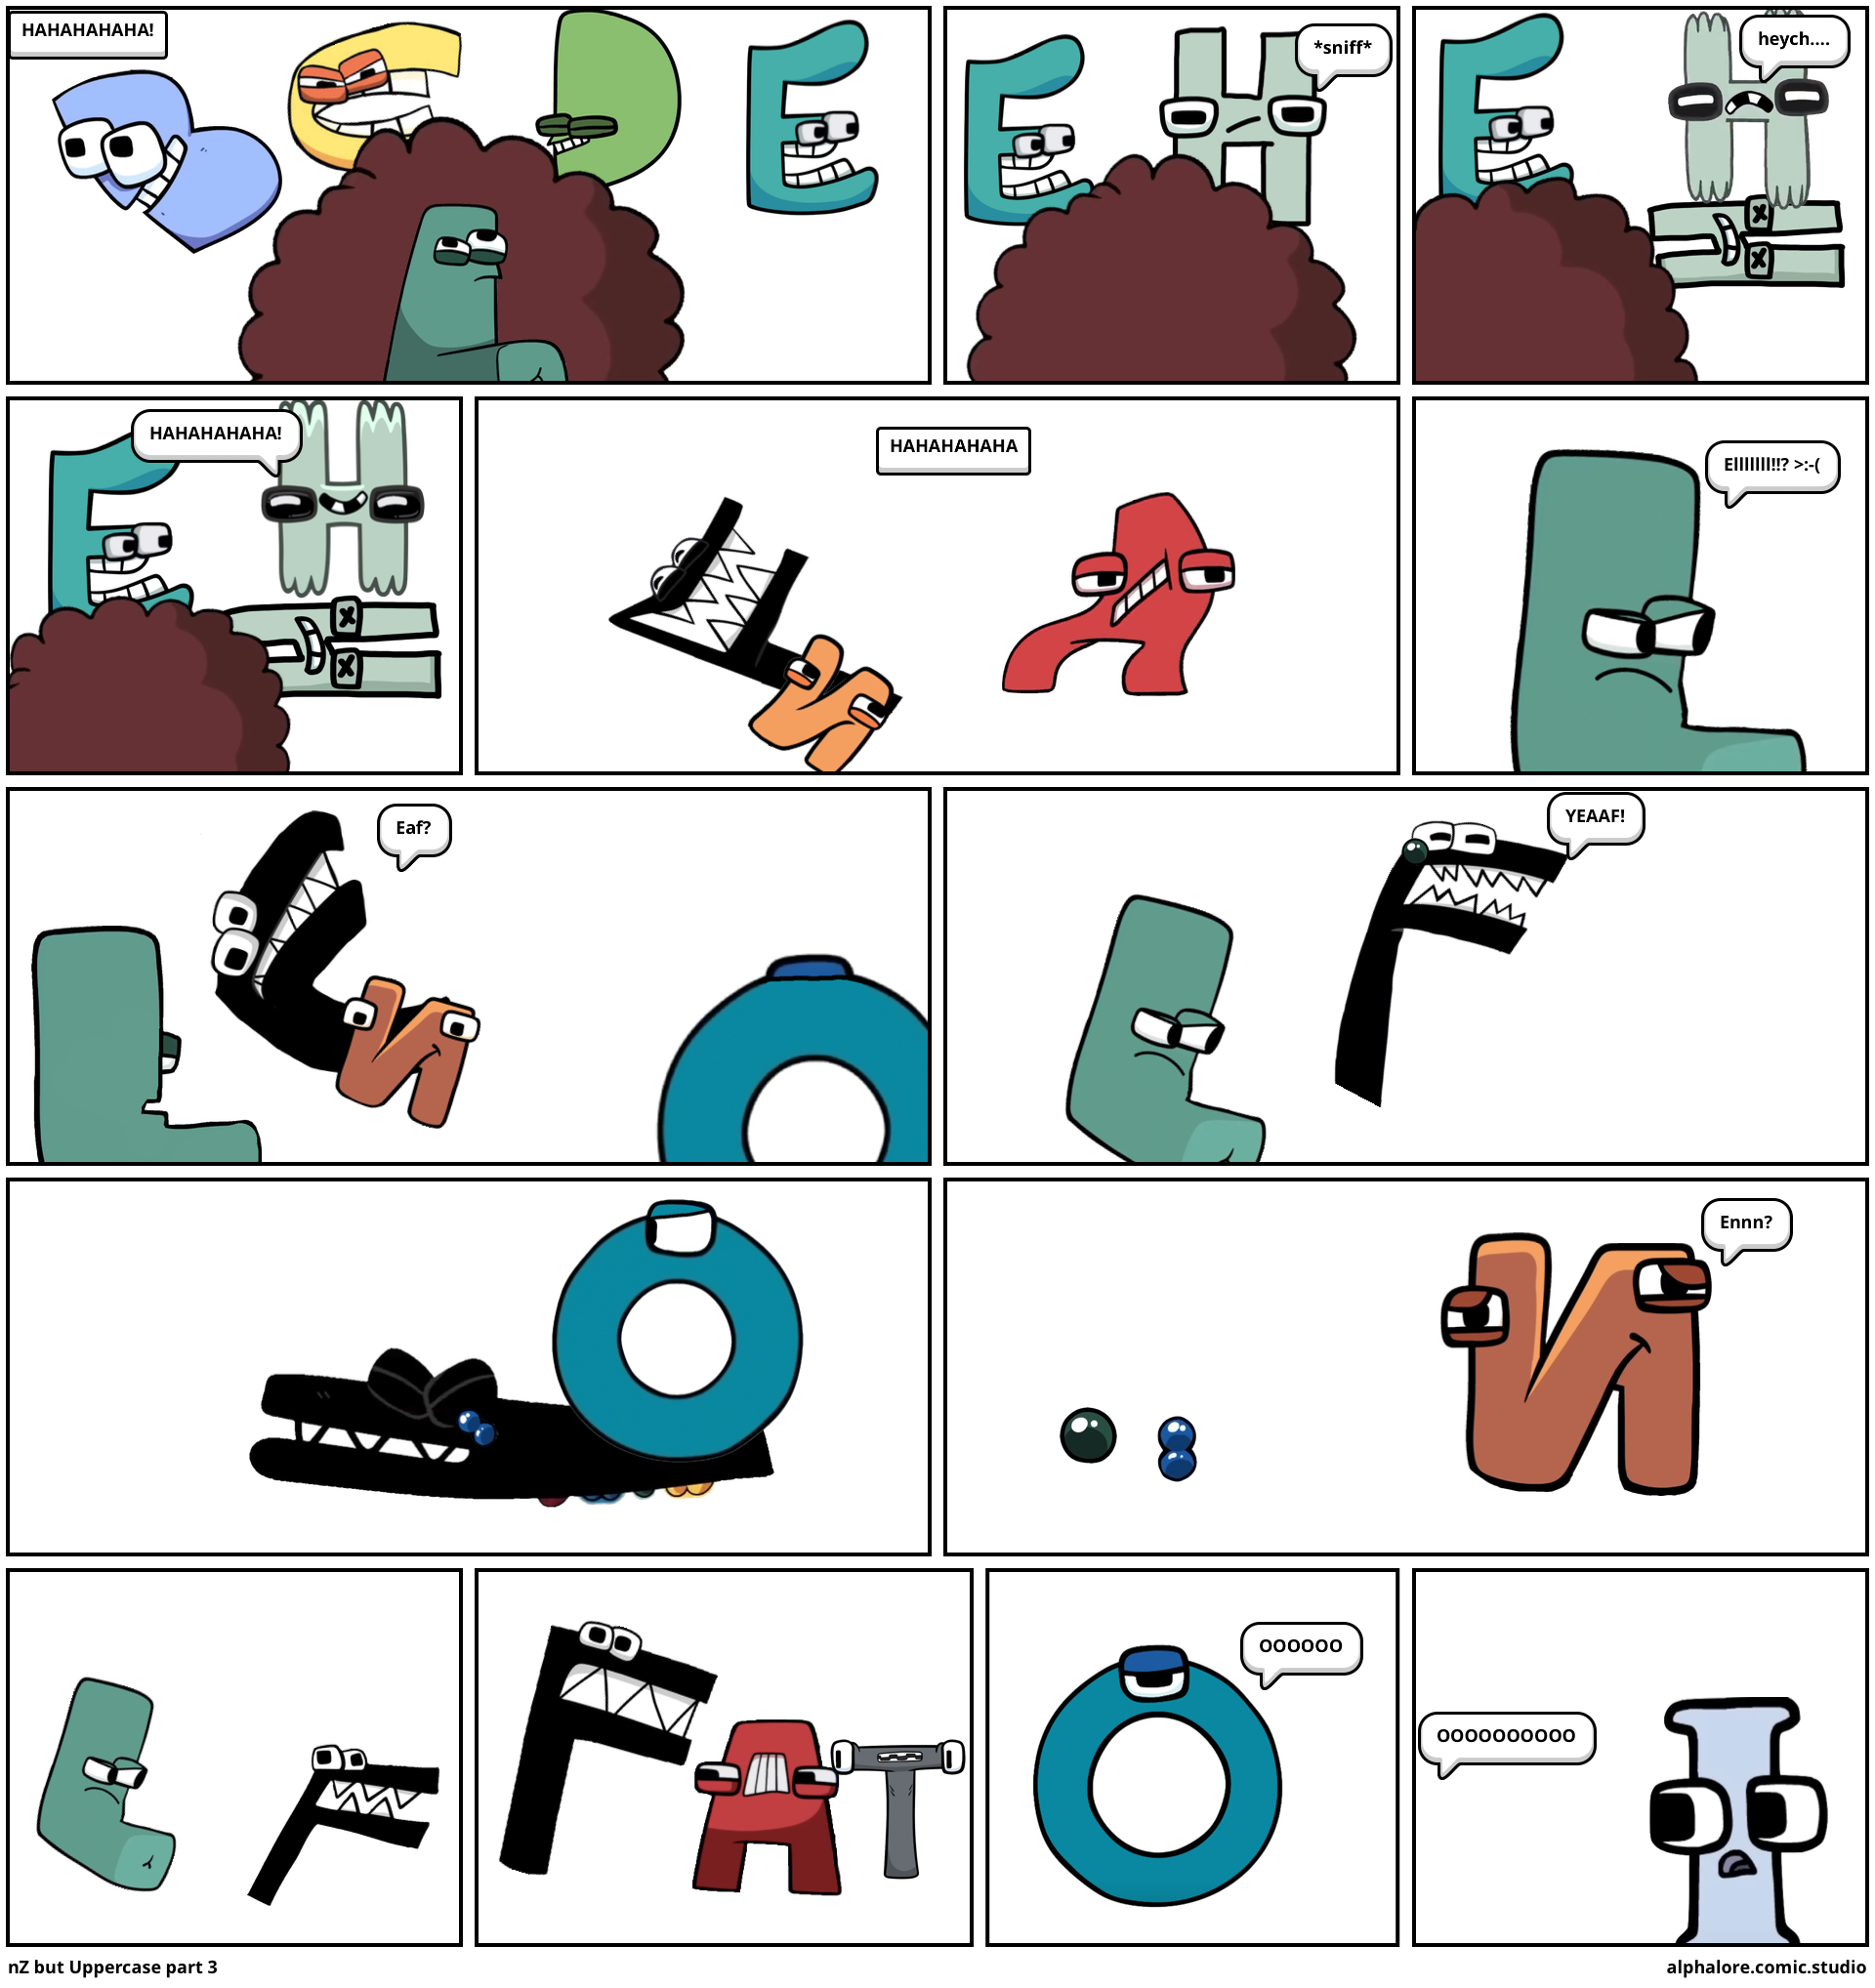 lowercase alphabet lore r-s - Comic Studio